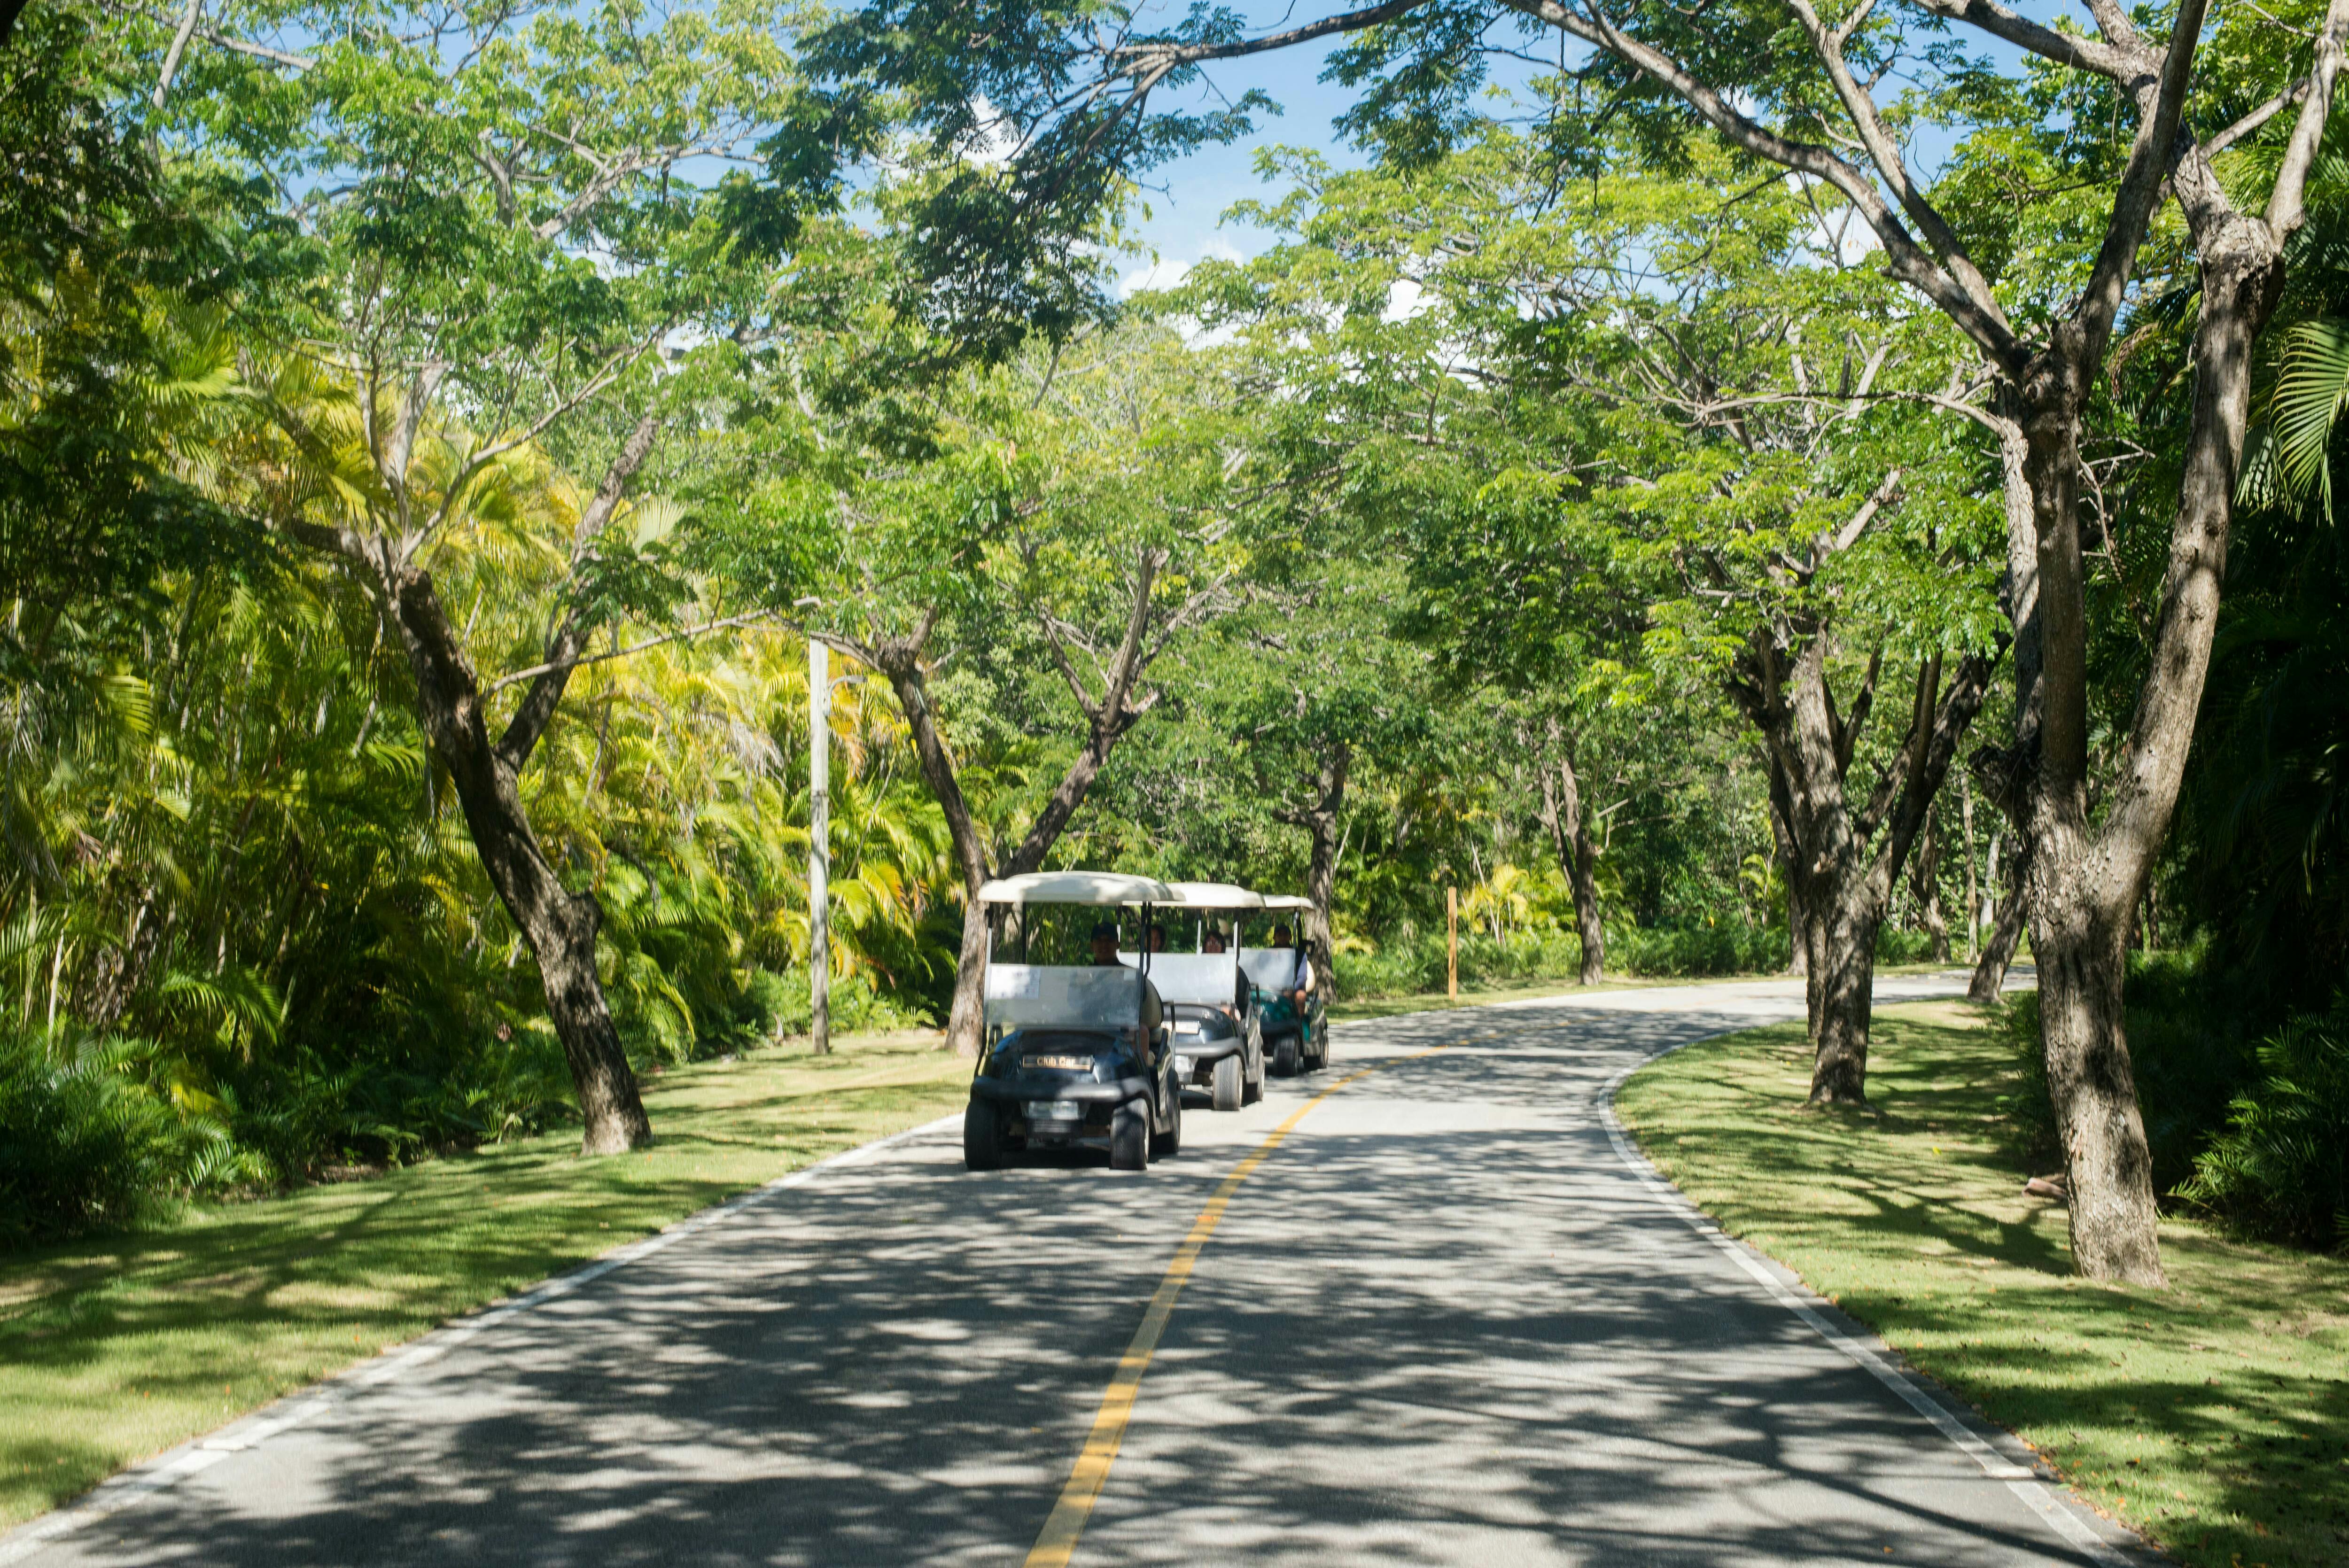 Punta Cana Eco Tour by Go-Kart